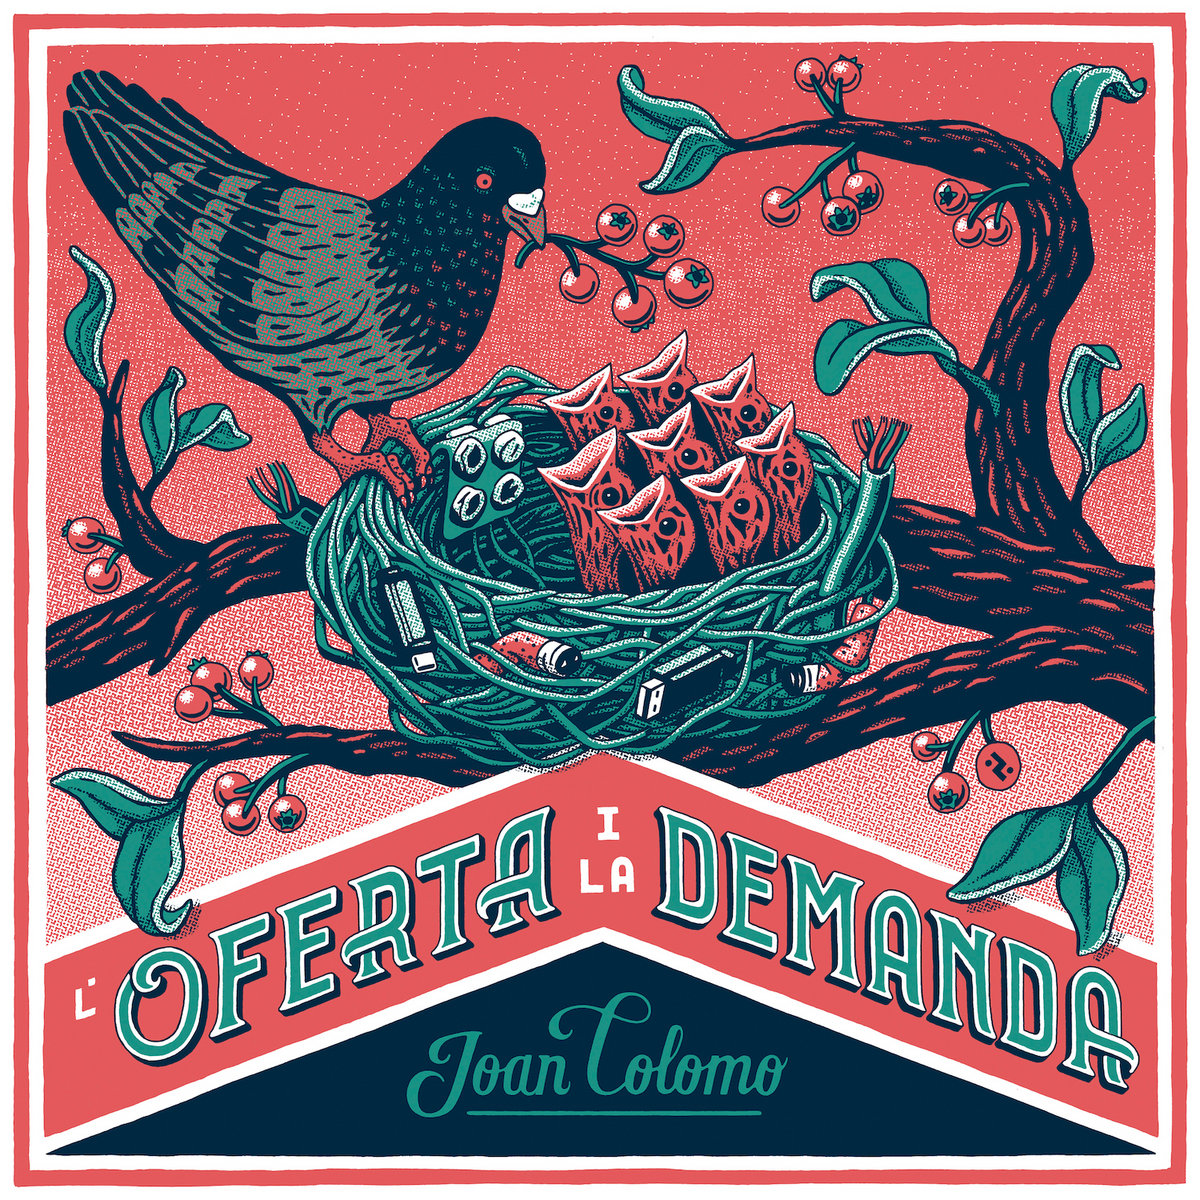 Joan Colomo "L'Oferta i la demanda" CD